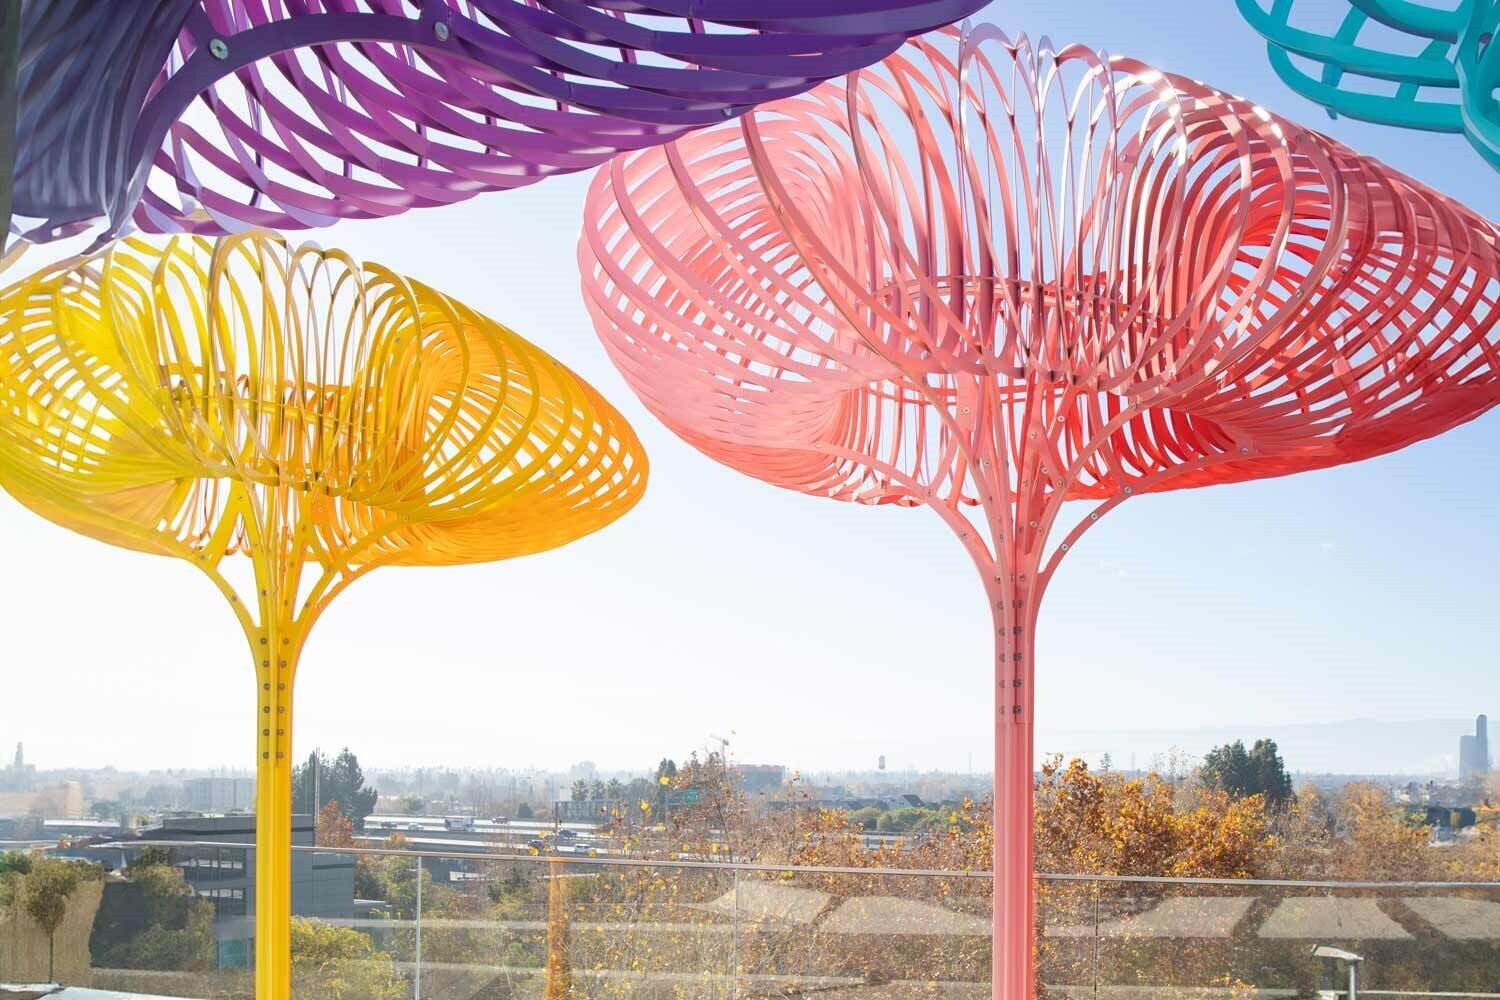 Adobe’s San José headquarters gets a creative makeover with colourful aluminium trees